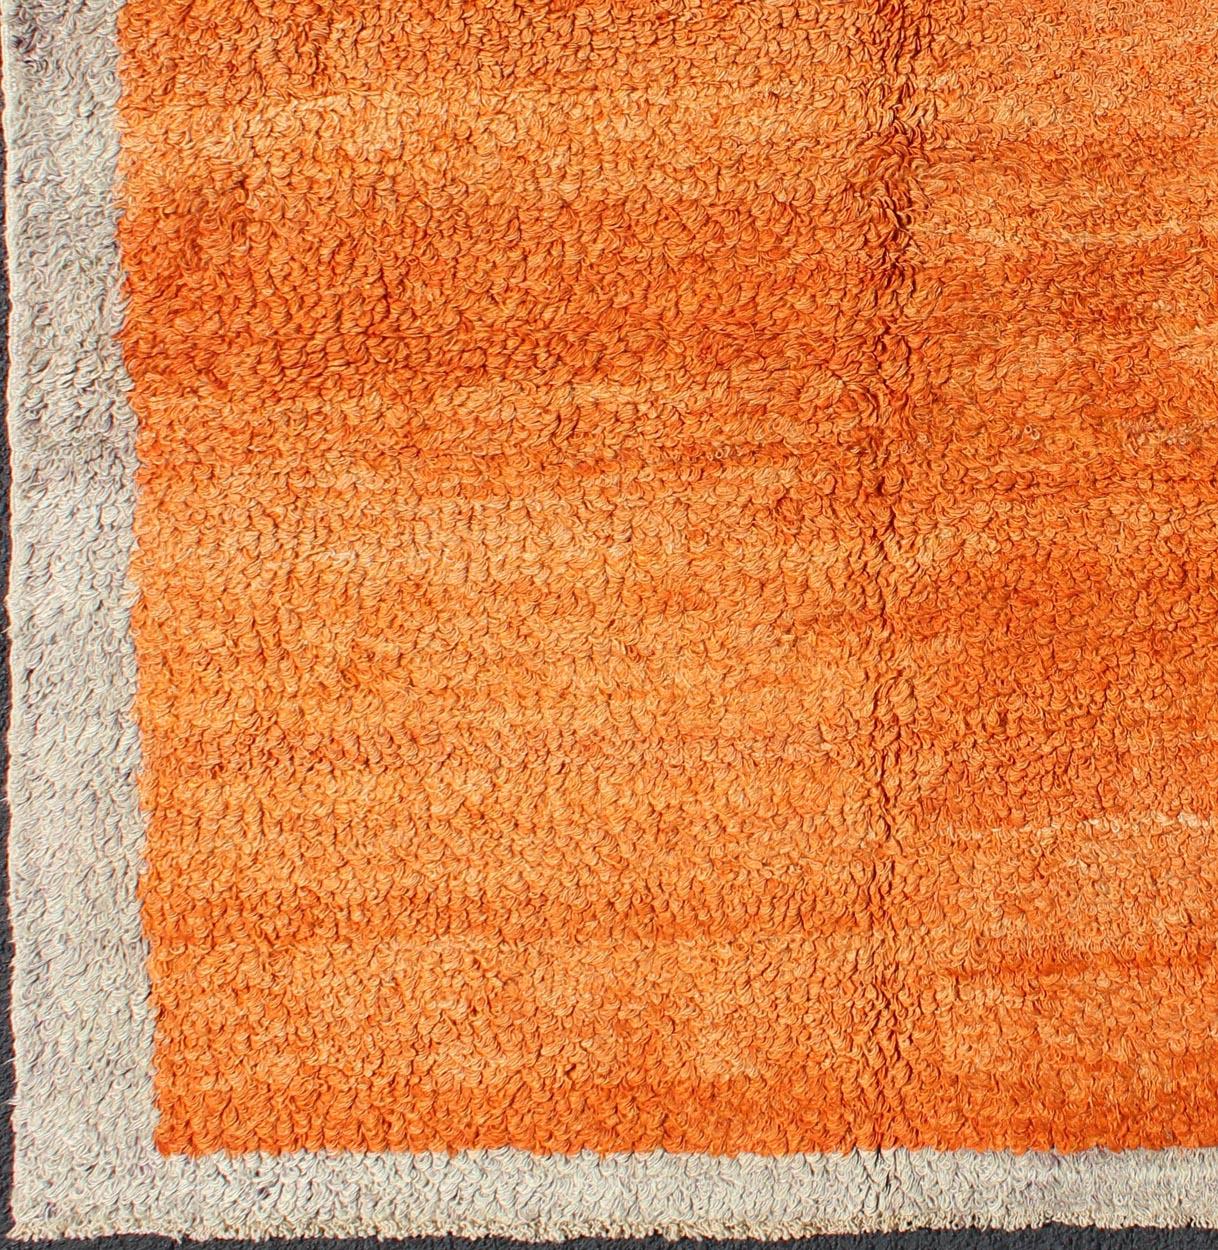 Squared Size Minimalist Tulu rug in Shades of Orange colors and Taupe Border. Vintage Tulu rug With Minimalist Design Rug in Solid Orange and Taupe. Keivan Woven Arts/ rug #EN-3310, Origin/Turkey, Hand knotted vintage rug. Modern design